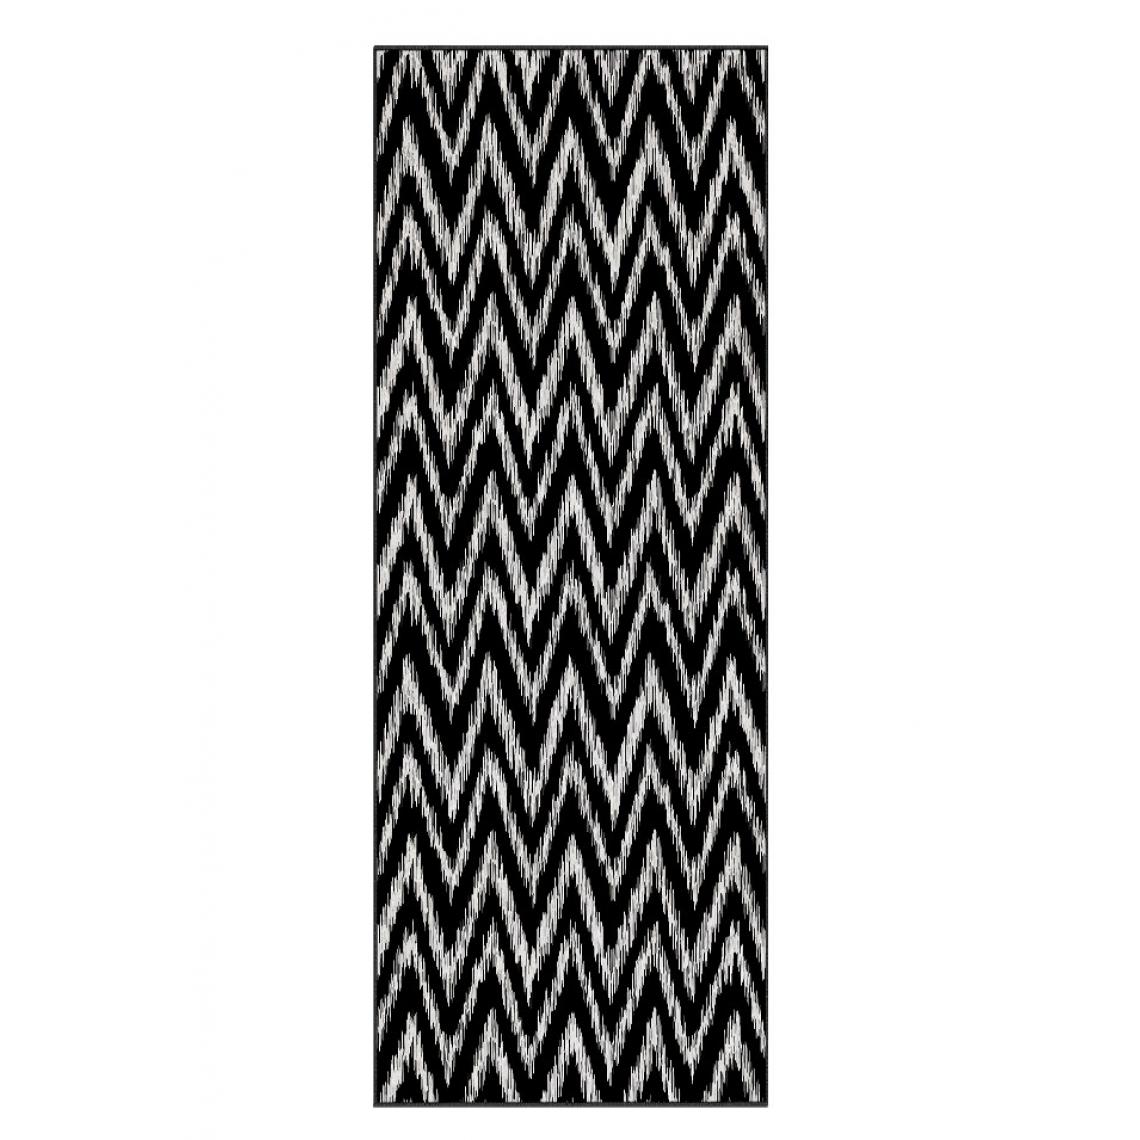 Homemania - HOMEMANIA Tapis décoratif Zebra - Blanc, Noir - 80 x 150 cm - Tapis